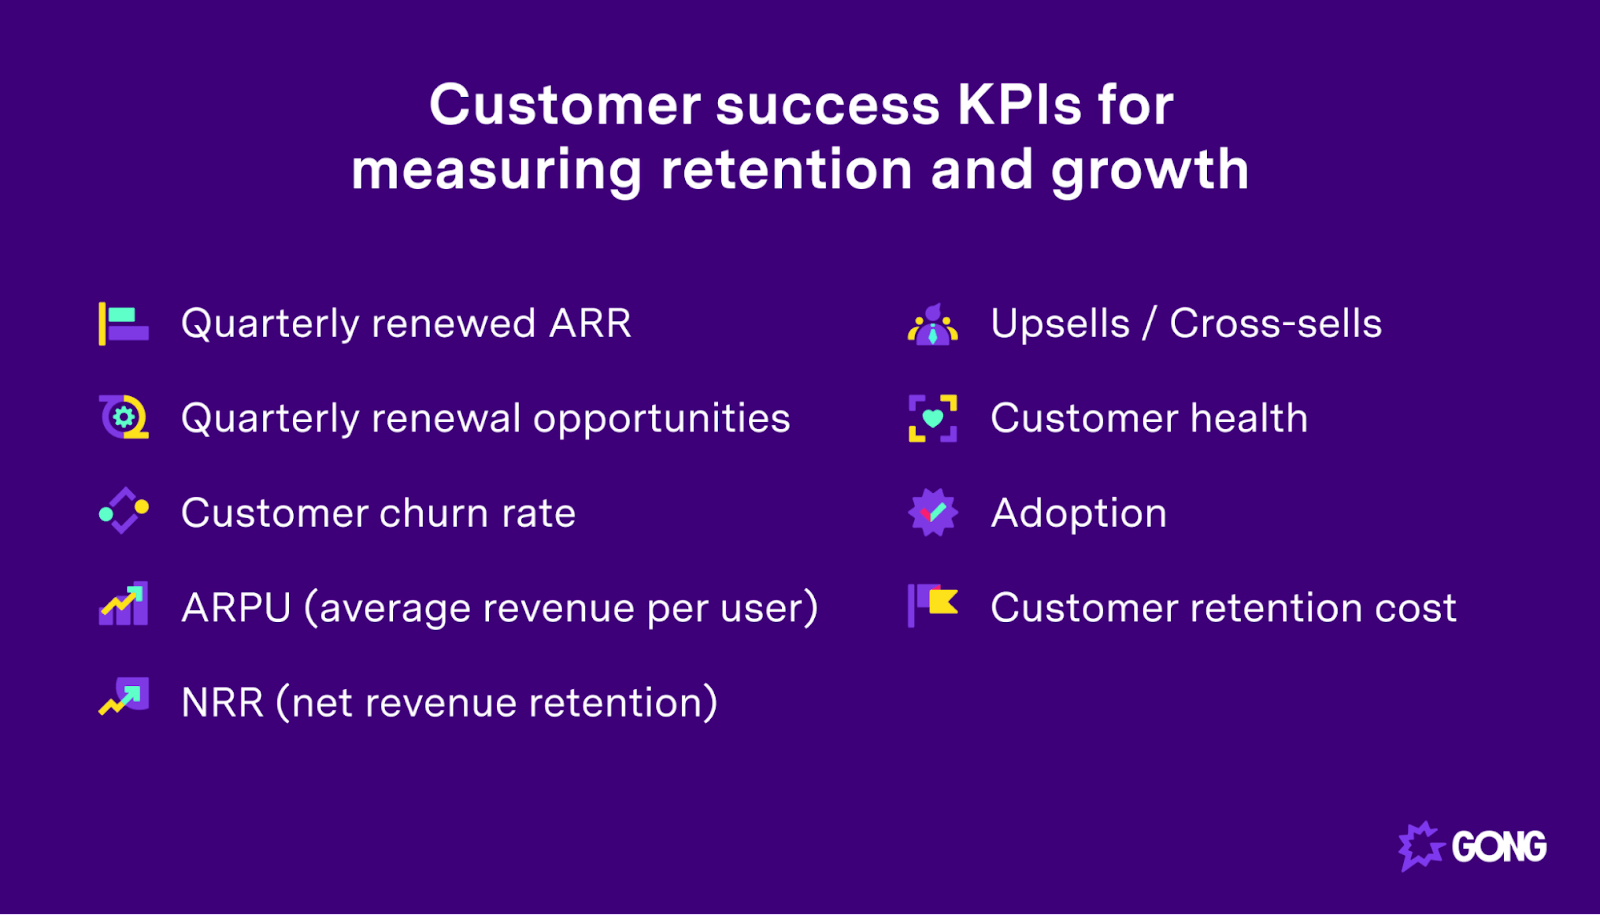 Customer retention and growth KPI ideas